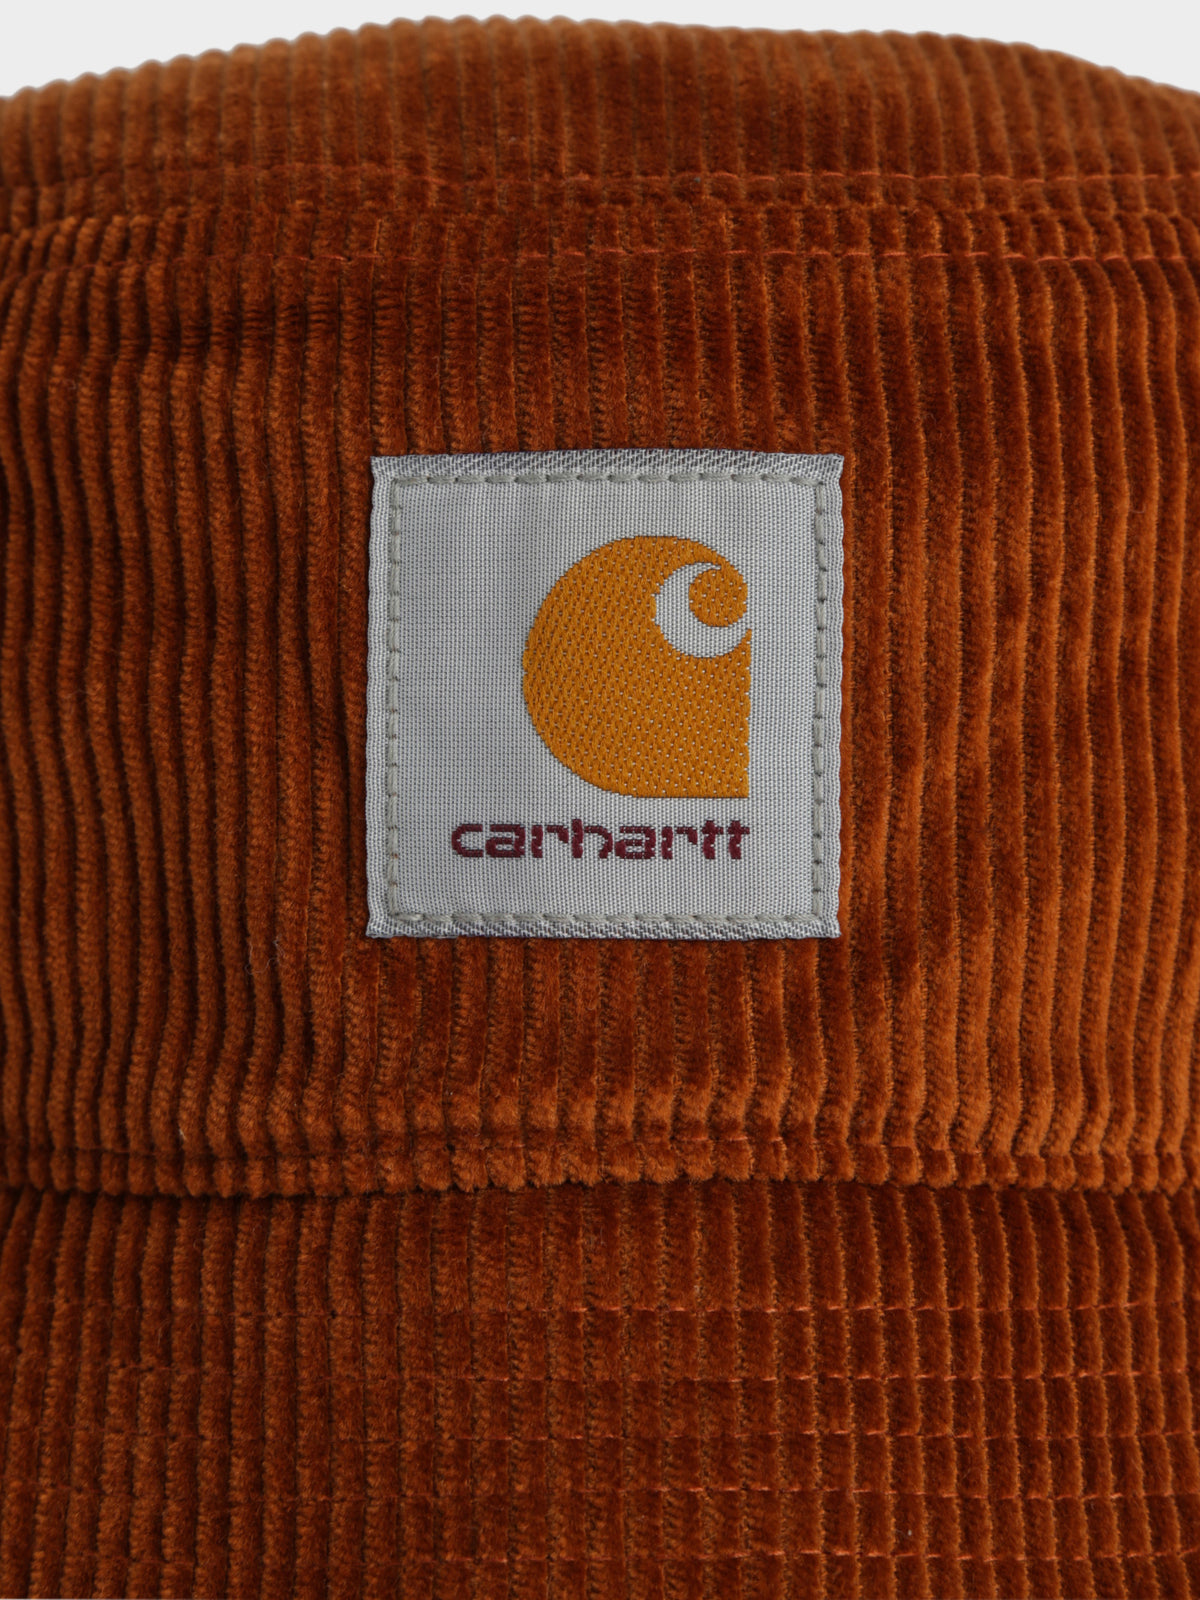 Corduroy Bucket Hat in Brandy Orange